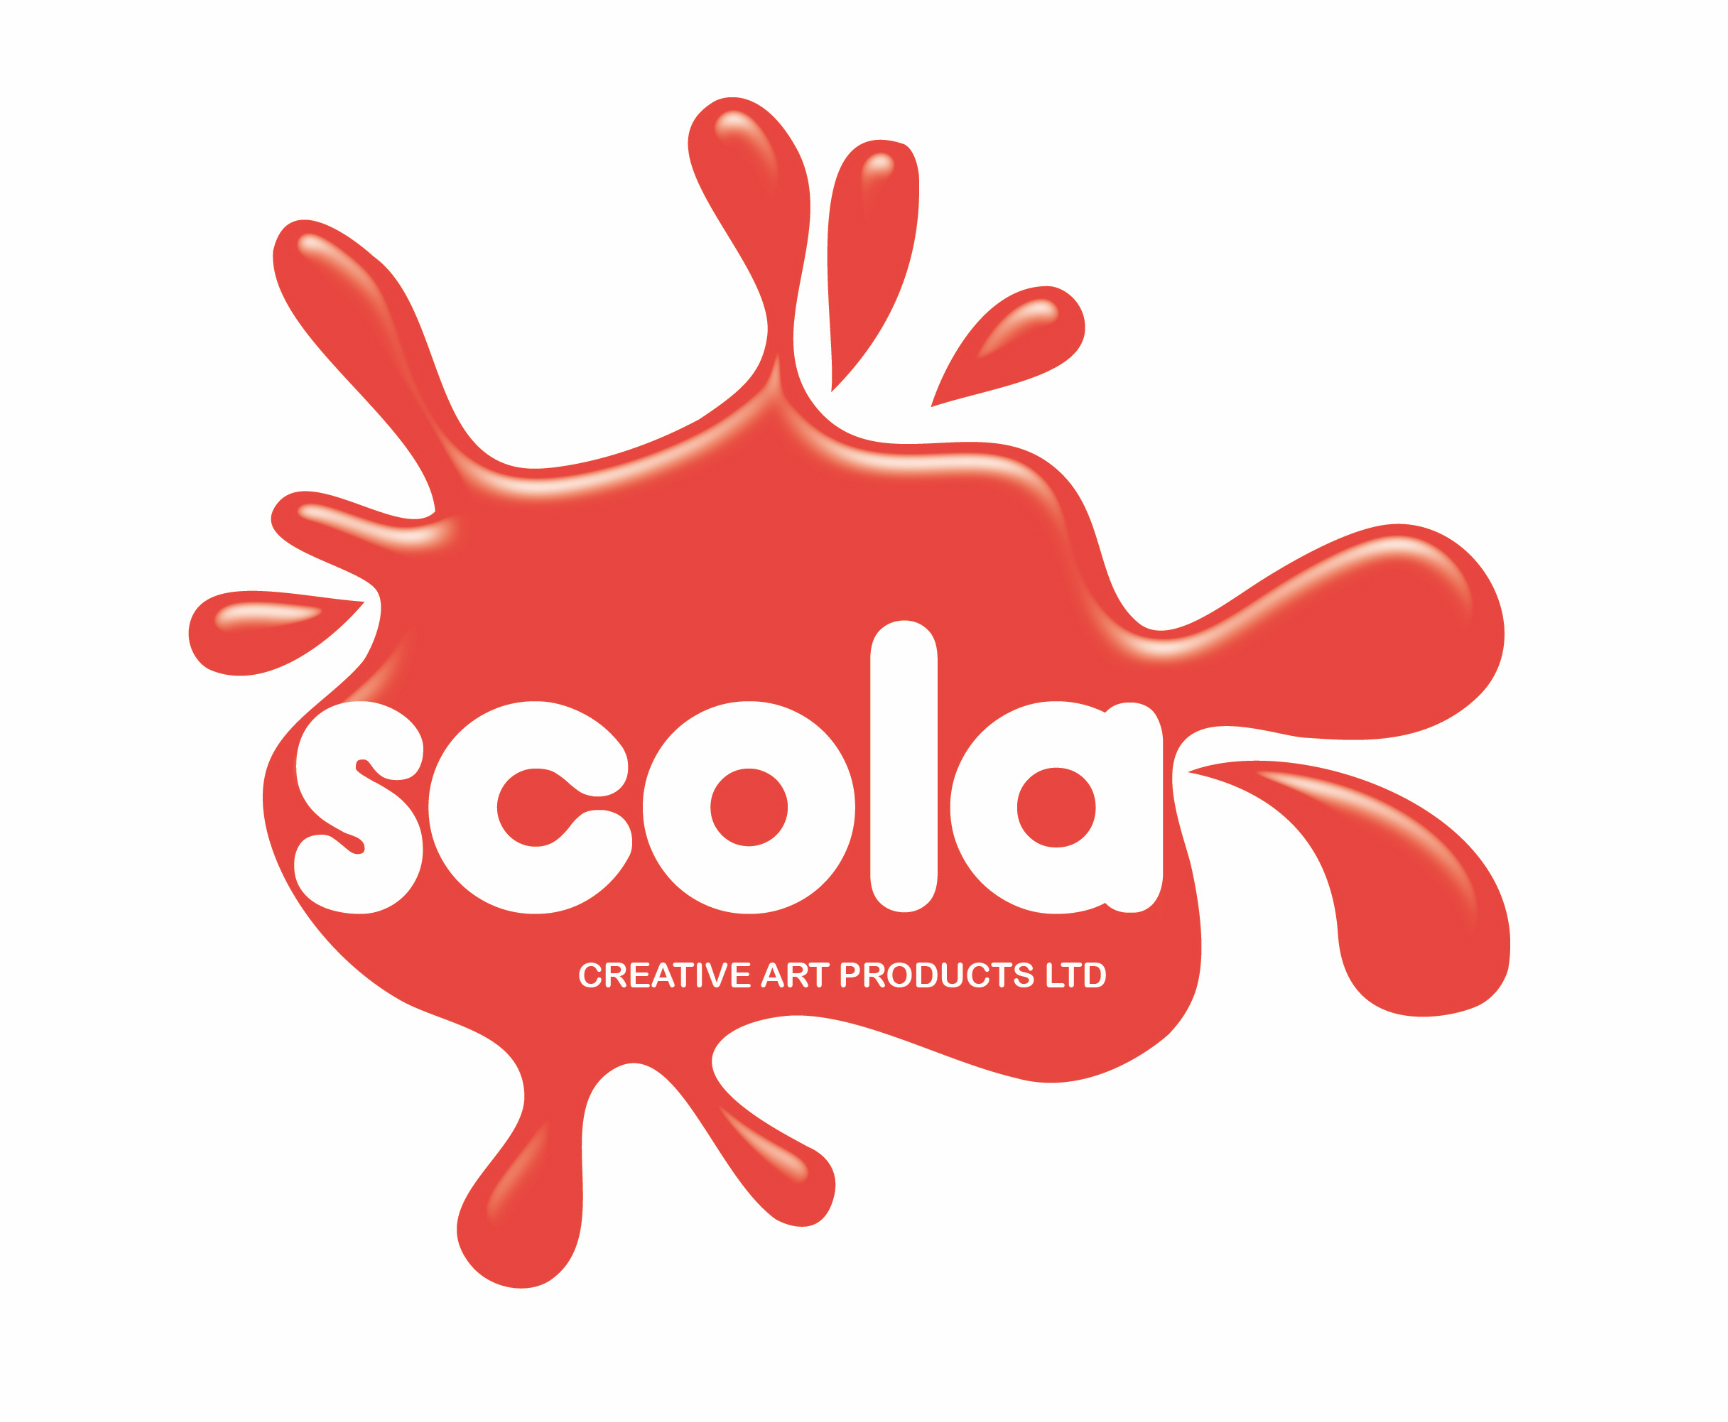 AccessArt Announces Partnership with Scola!